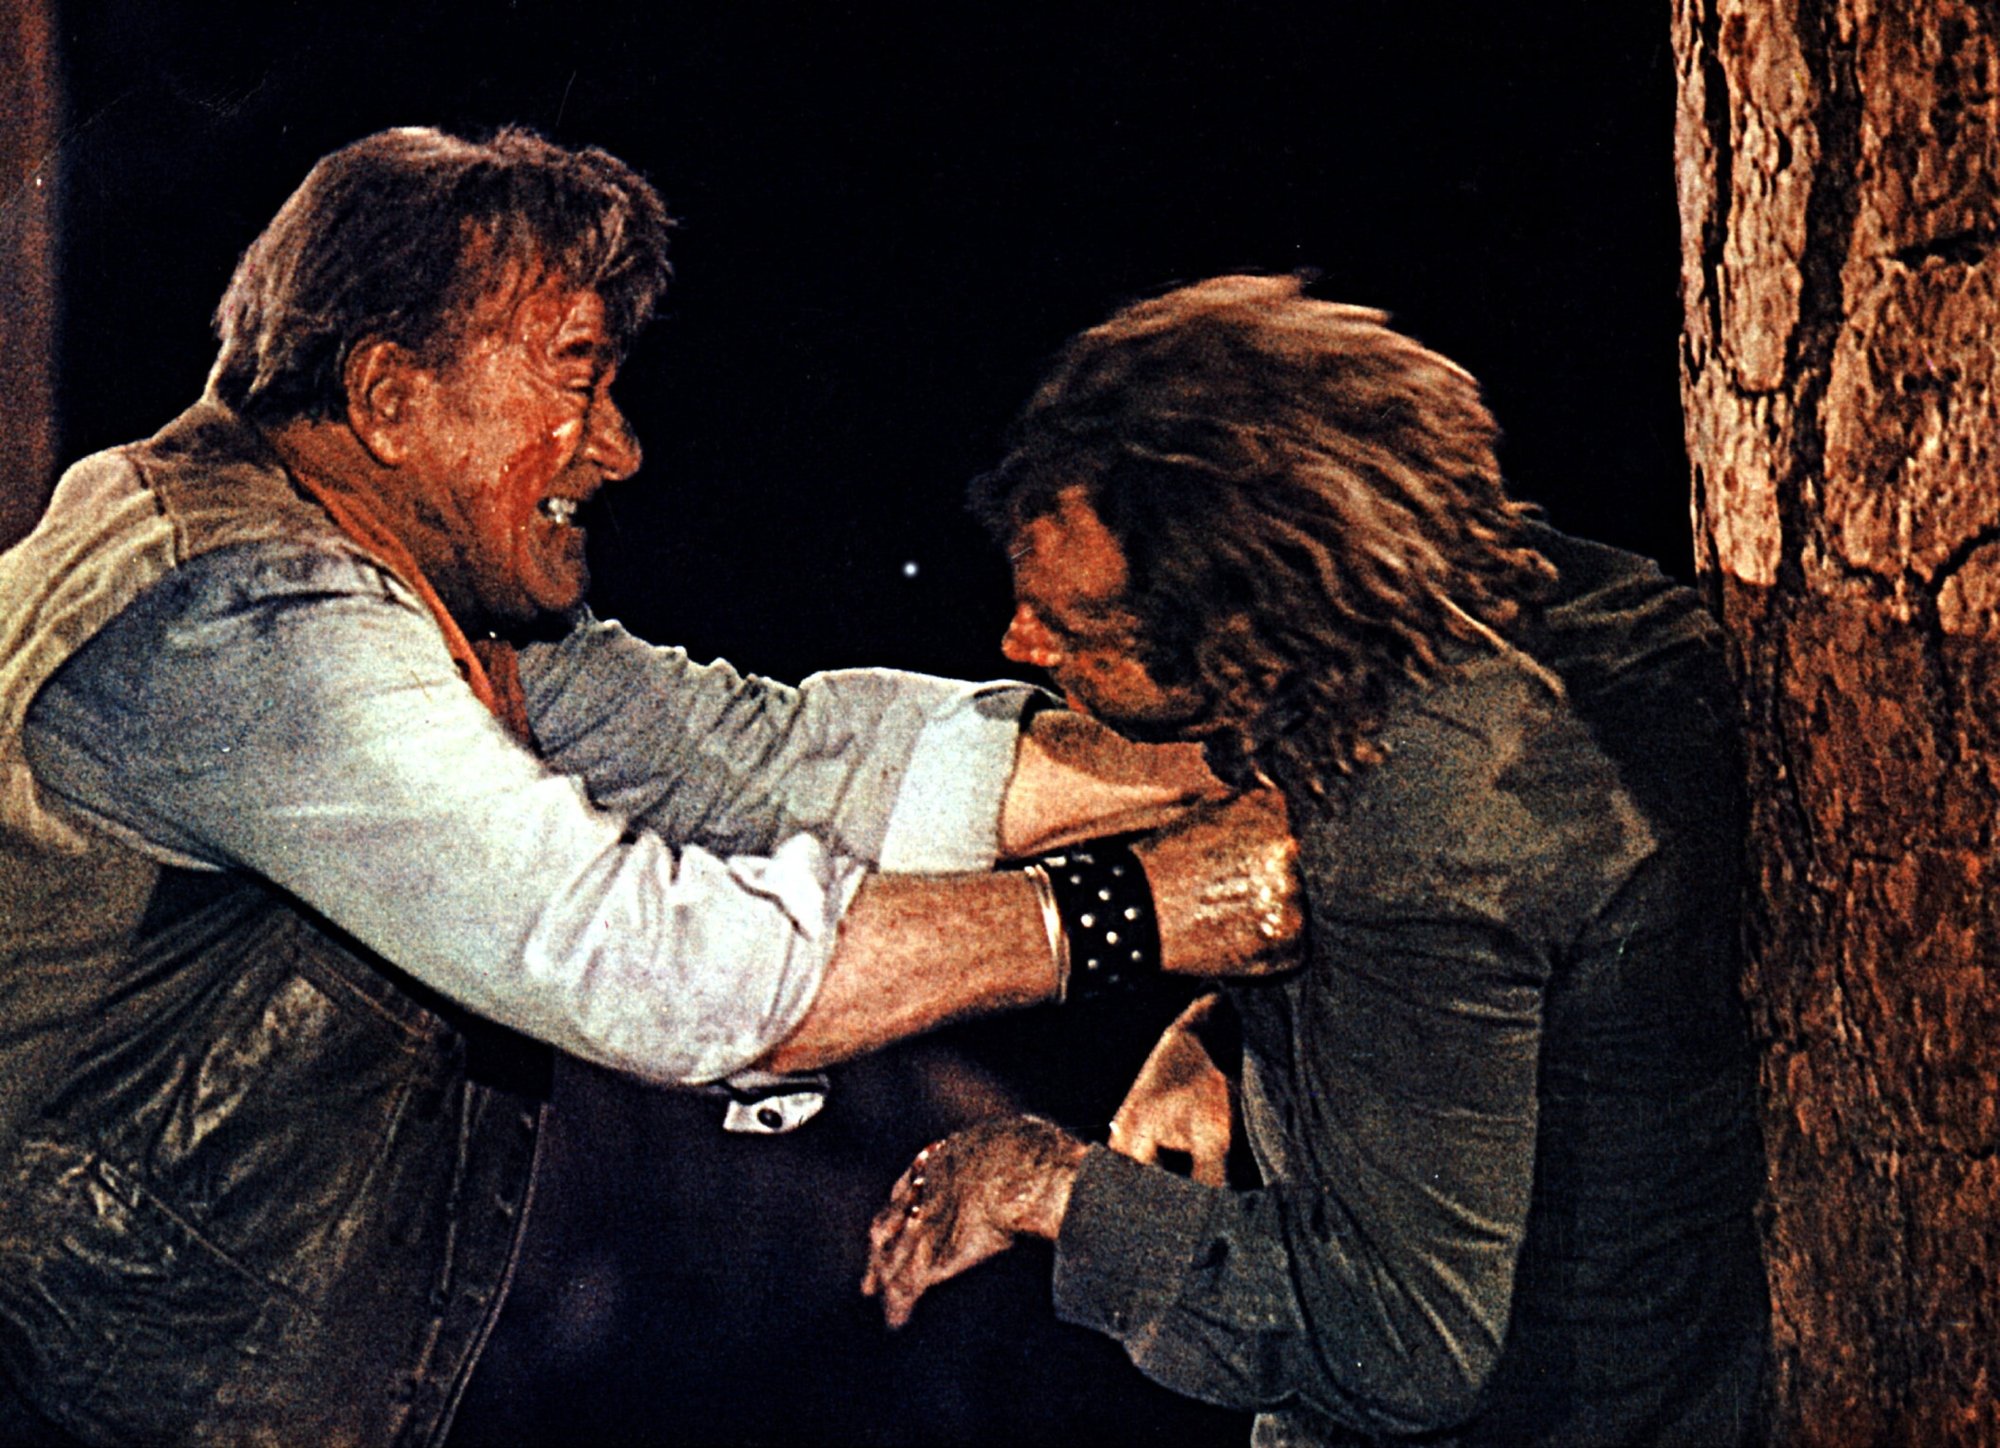 'The Cowboys' John Wayne as Wil Andersen and Bruce Dern as Asa Watts (Long Hair) brutally fighting against a tree